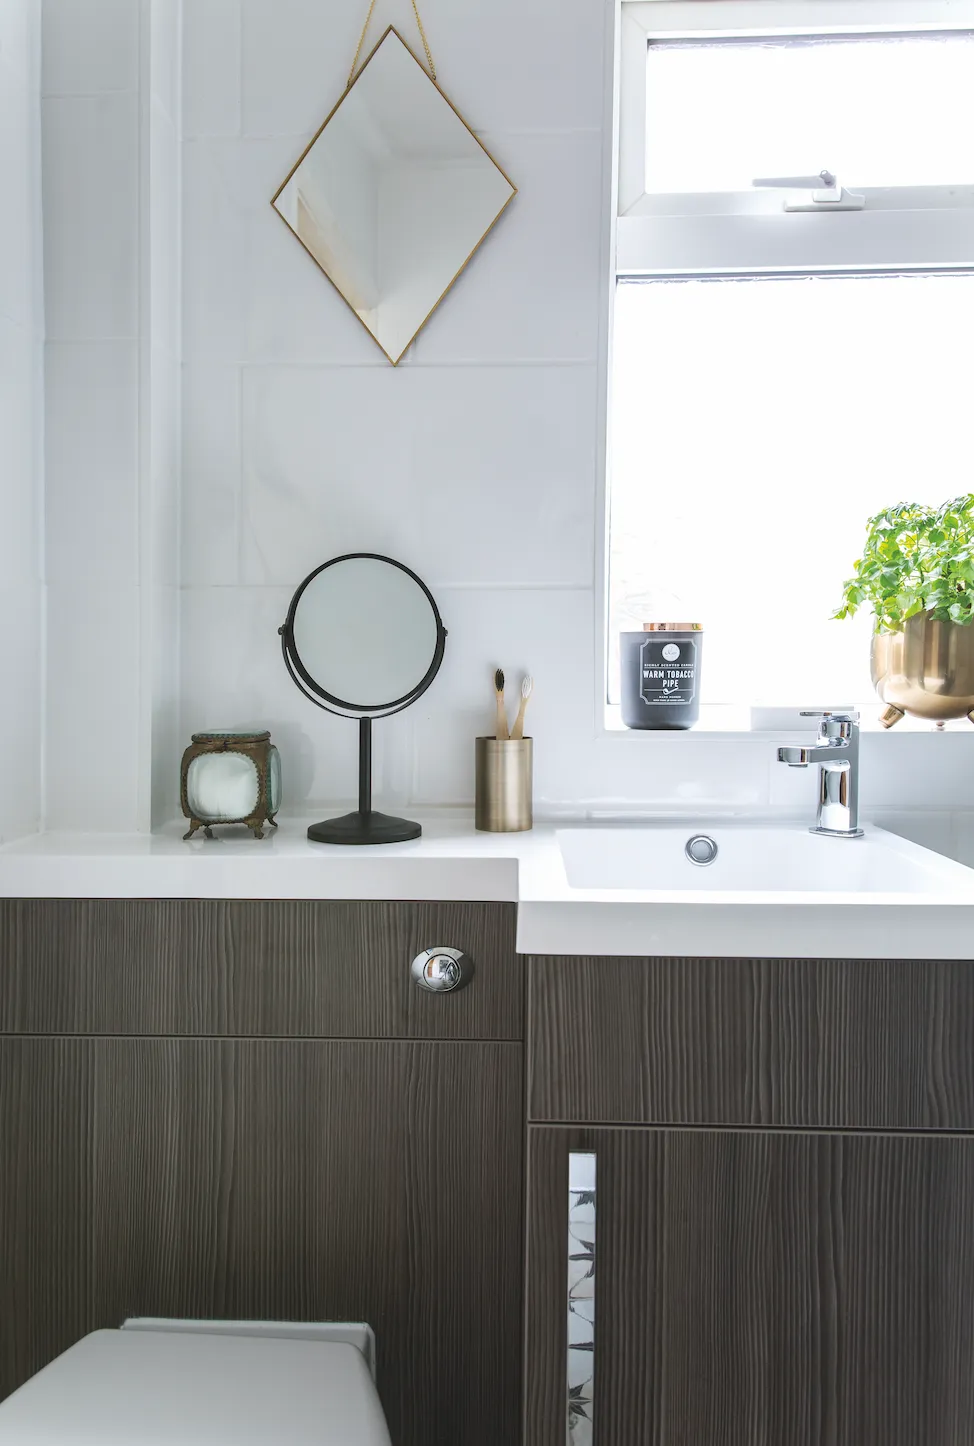 Bathroom makeover: 'Our bathroom feels like a mini boutique hotel'